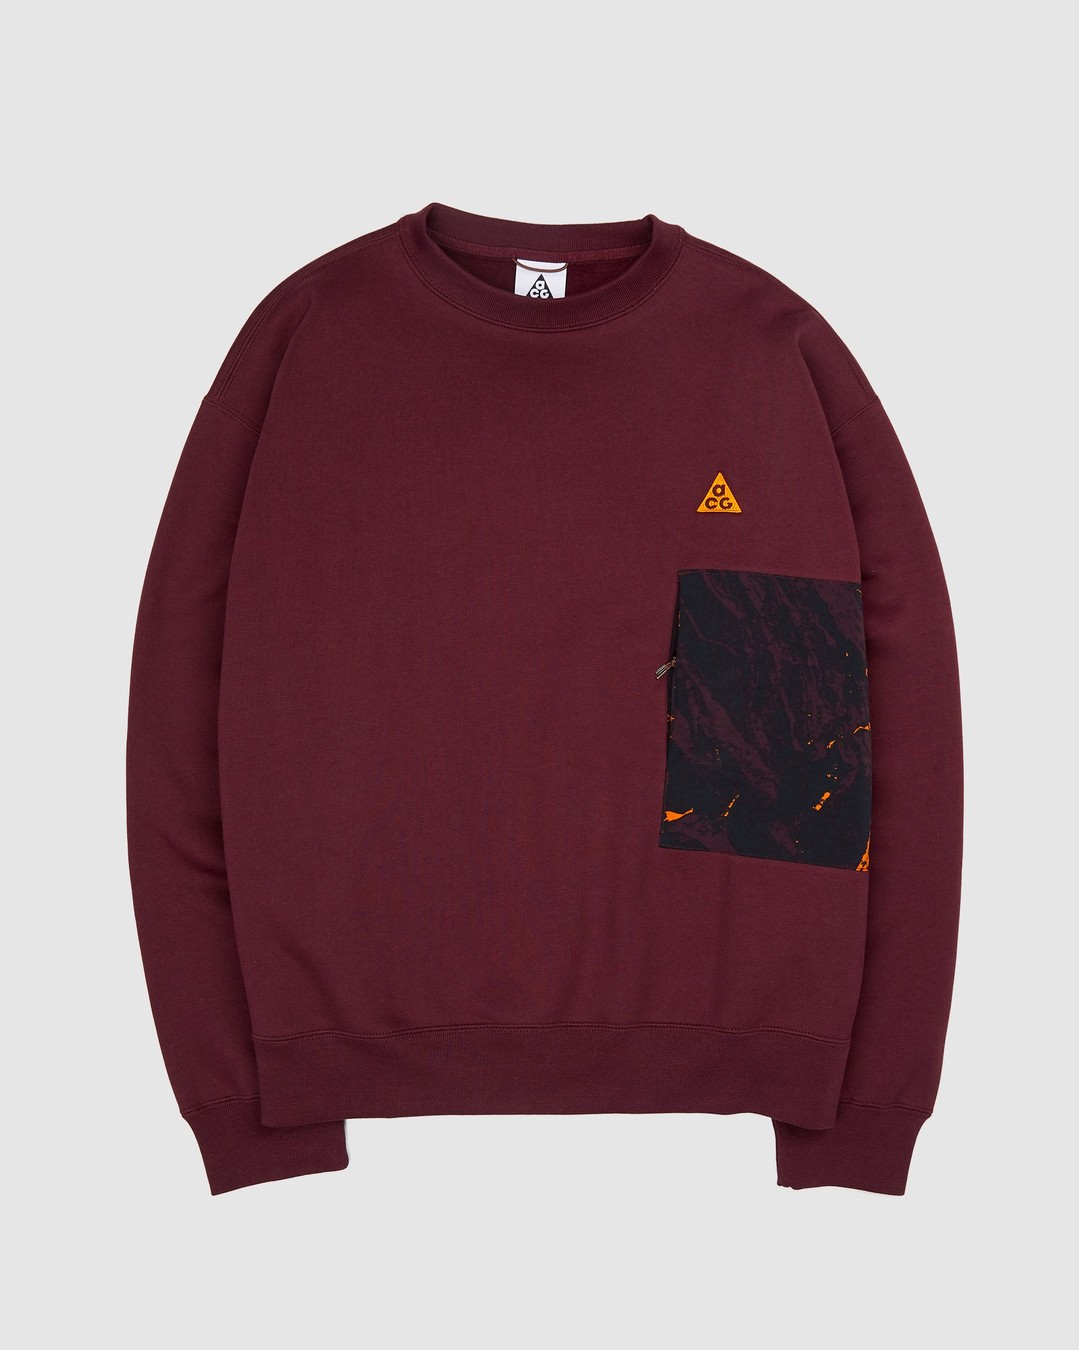 Nike ACG – Allover Print Crew Sweater Burgundy - Sweats - Red - Image 1